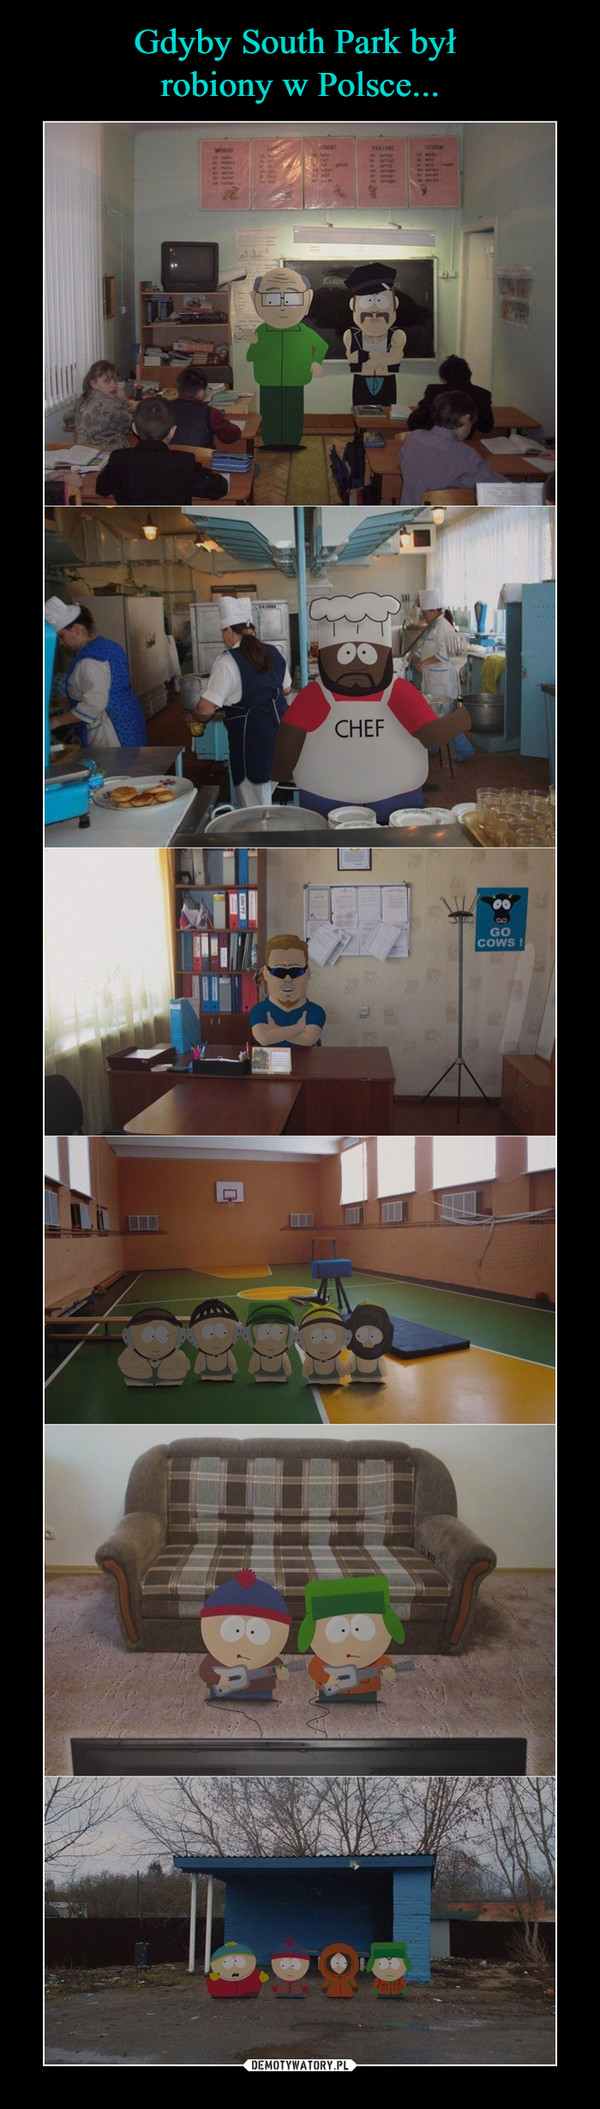 Gdyby South Park był 
robiony w Polsce...